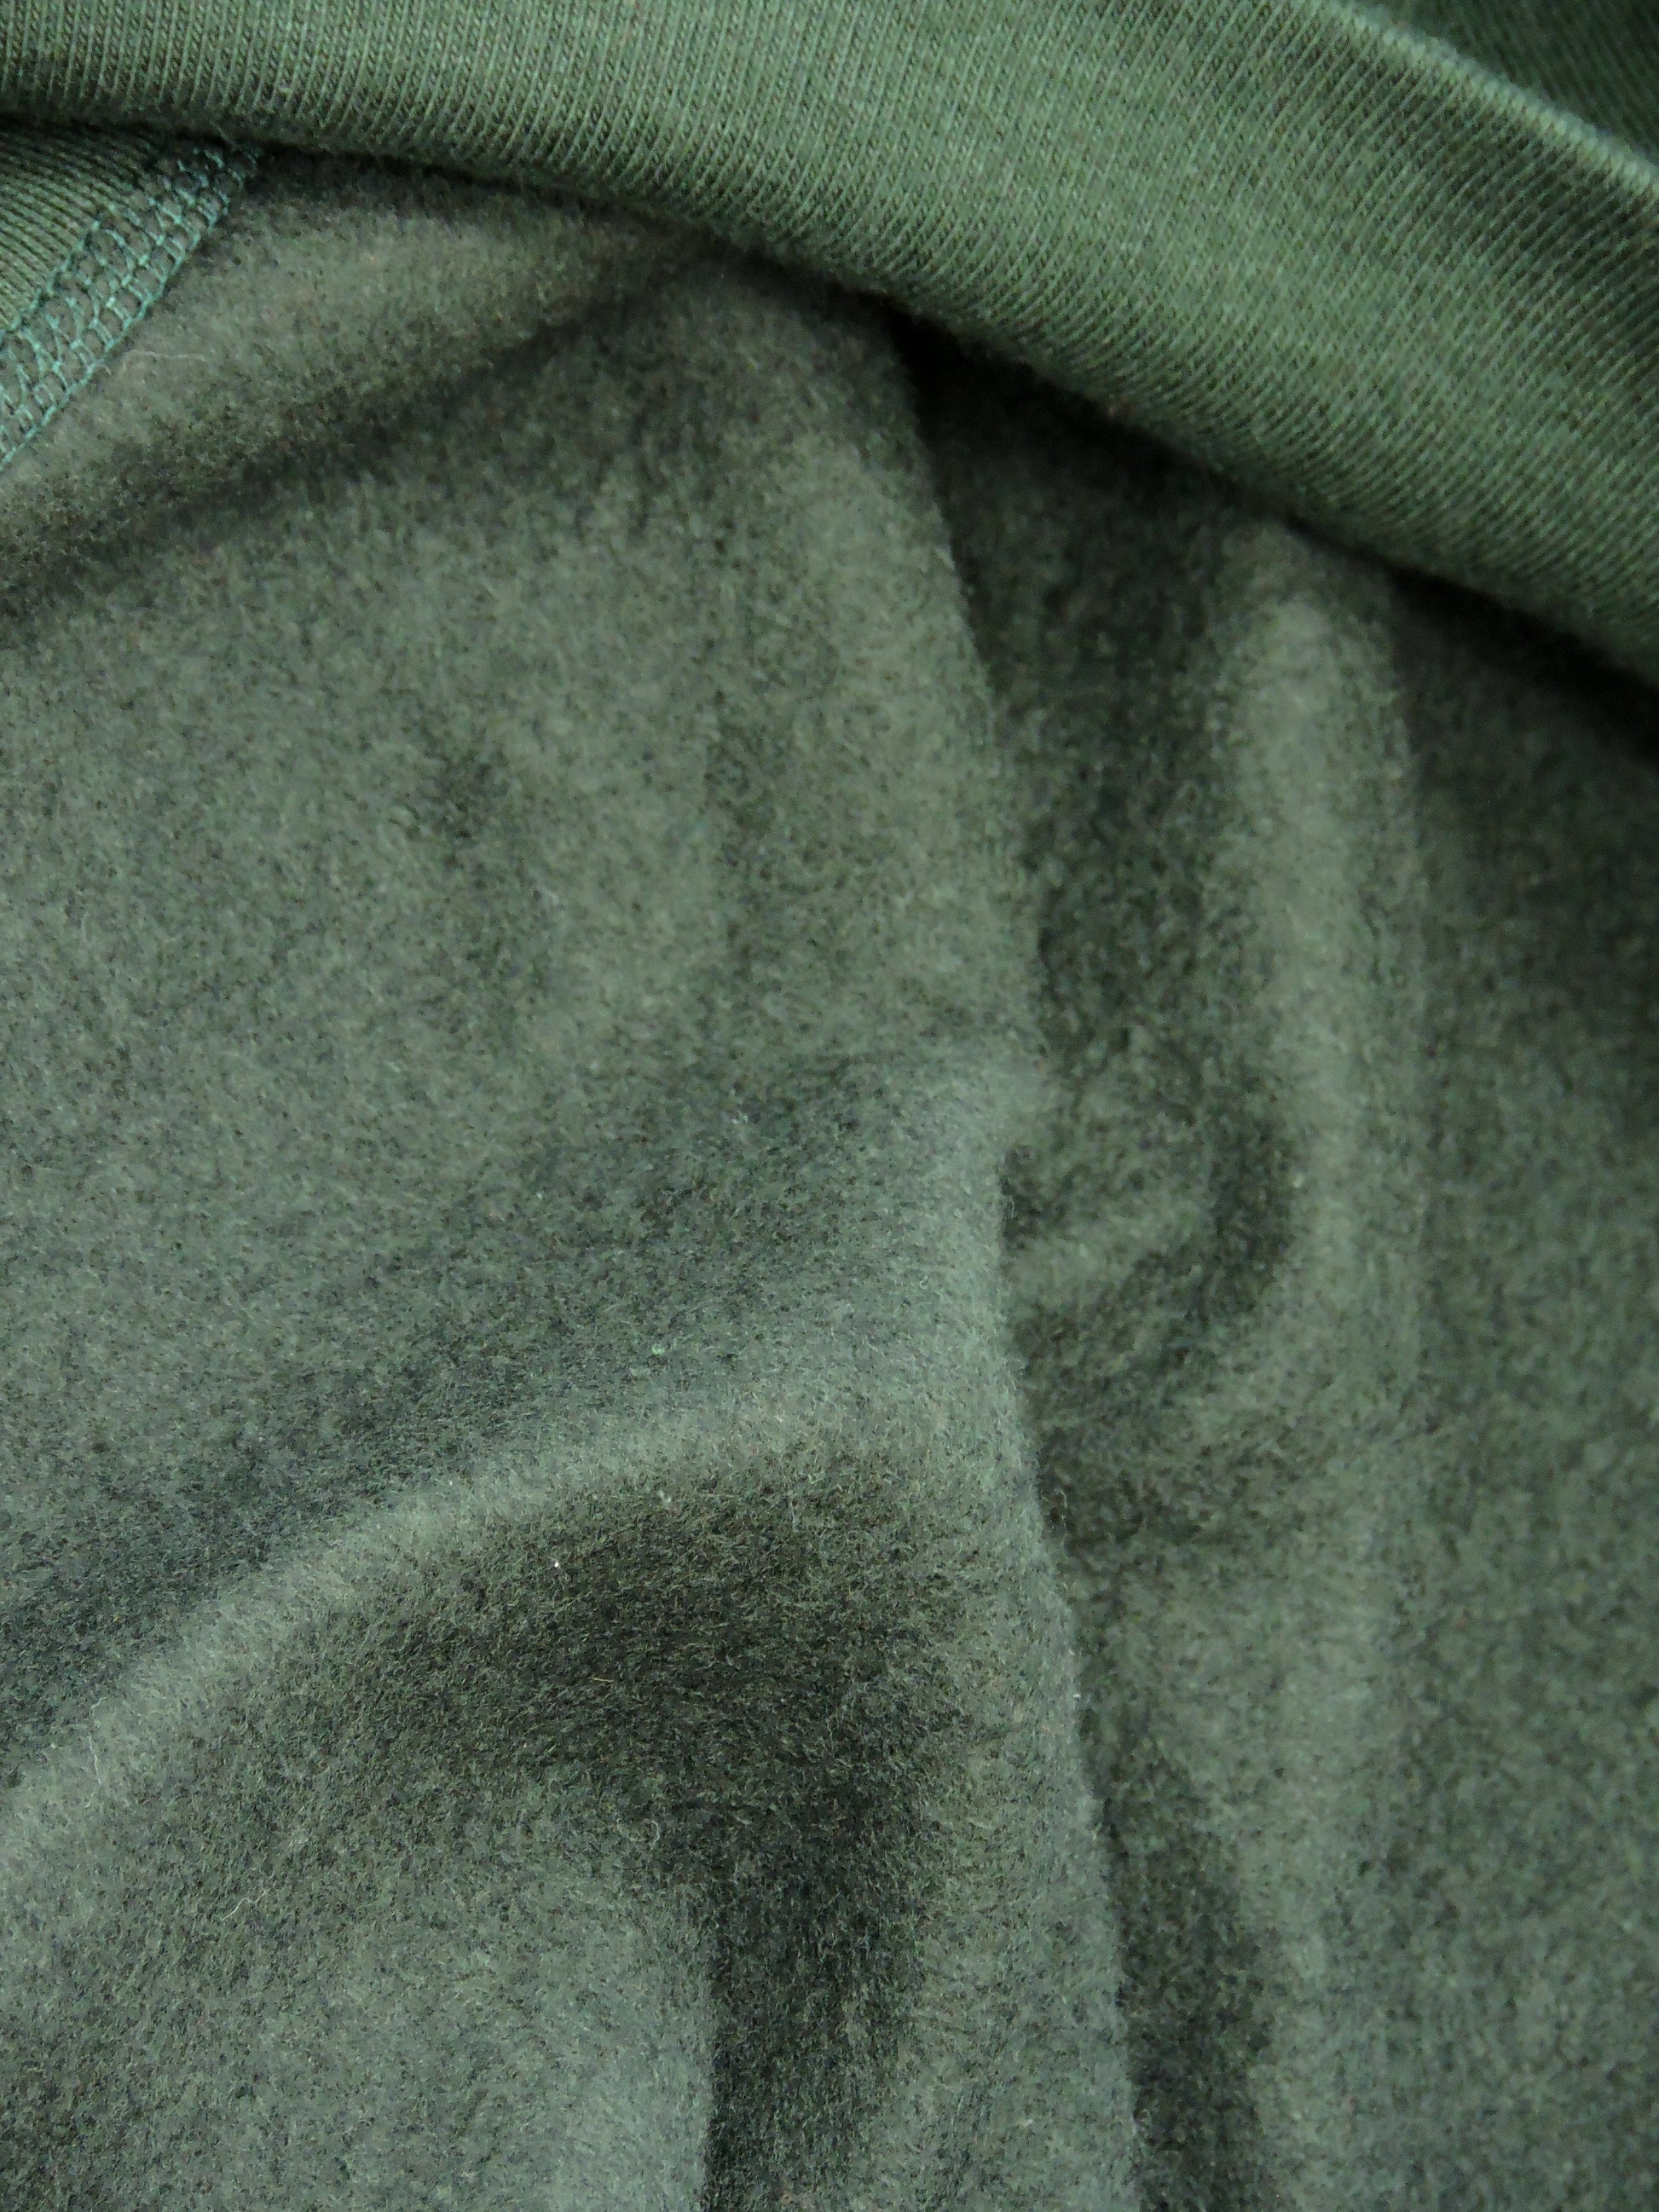 Close up of plushy fleece interior